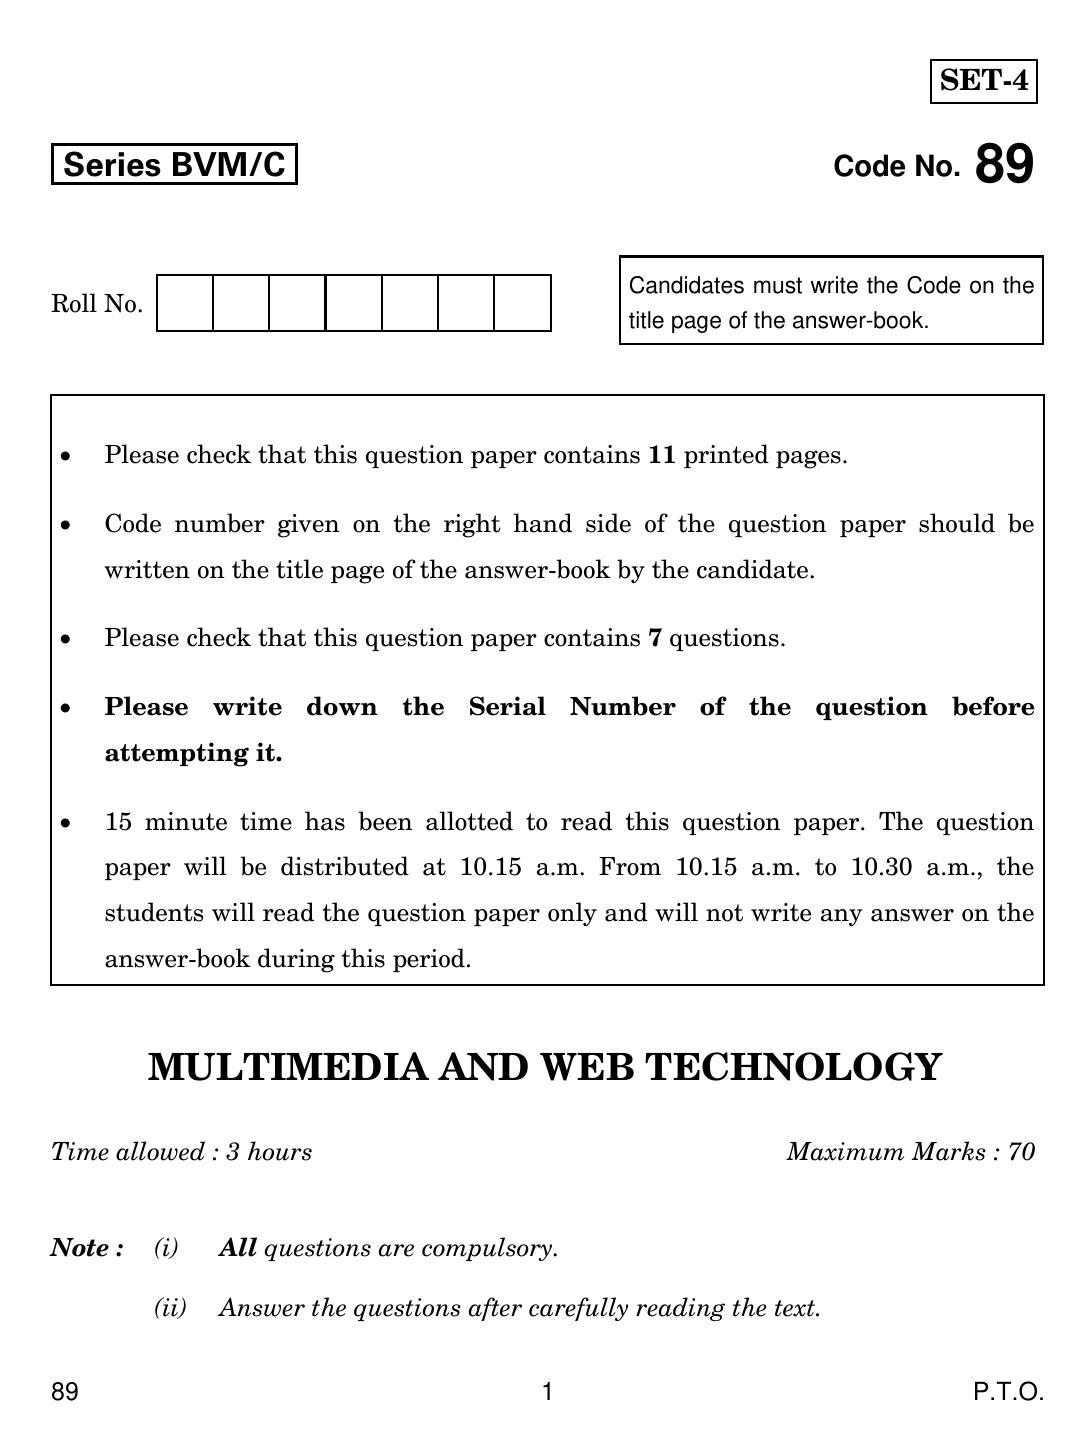 CBSE Class 12 89 MULTIMEDIA & WEB TECH. 2019 Compartment Question Paper - Page 1